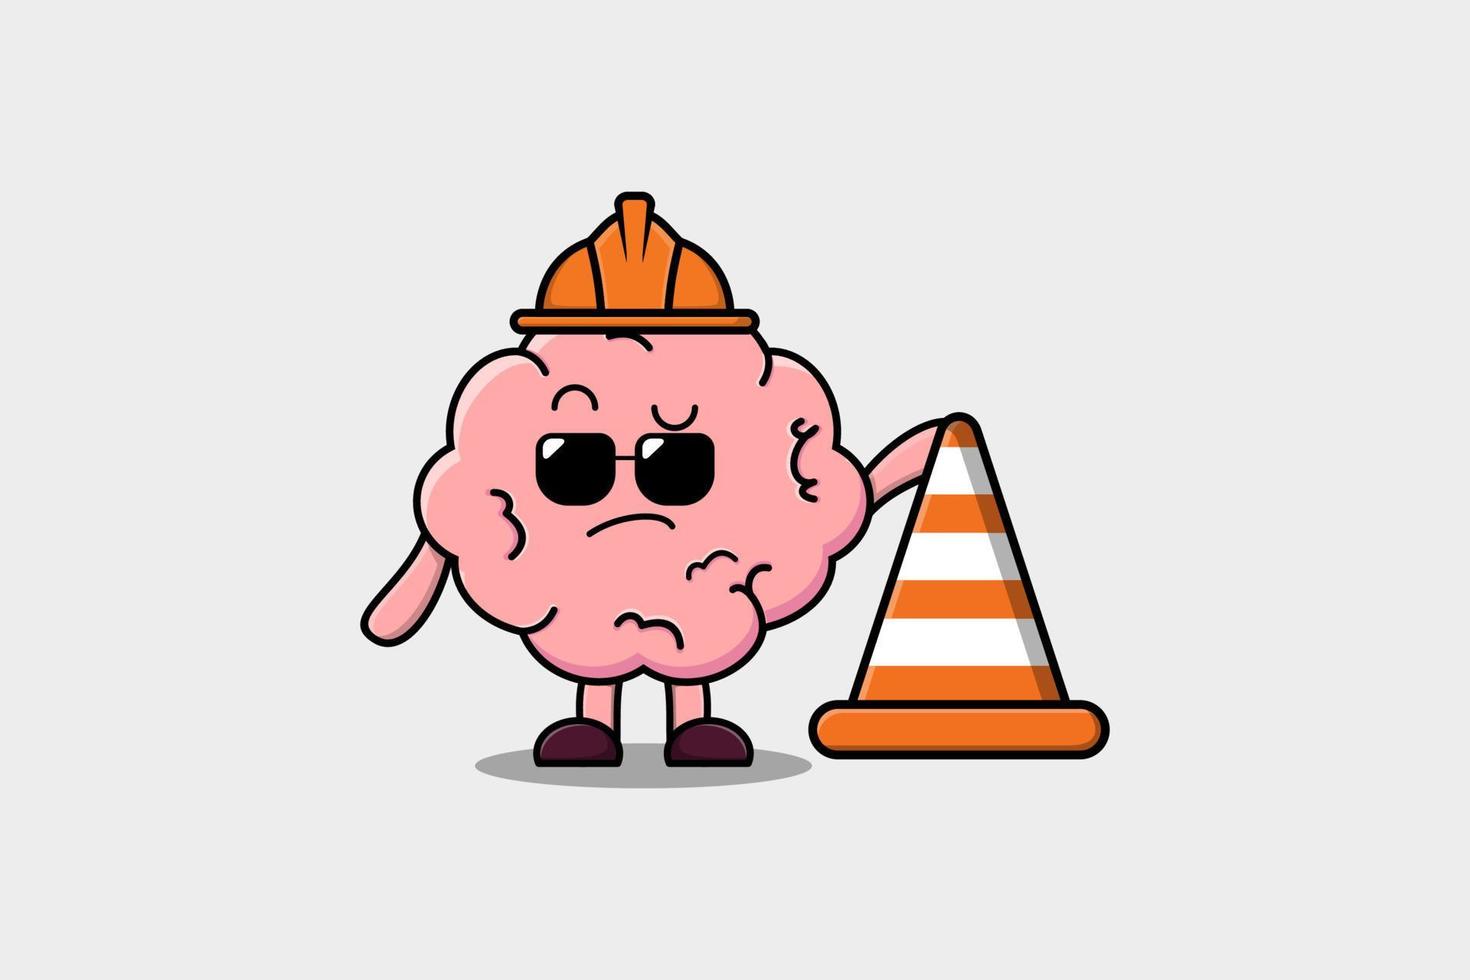 bouw arbeider hersenen schattig karakter mascotte vector